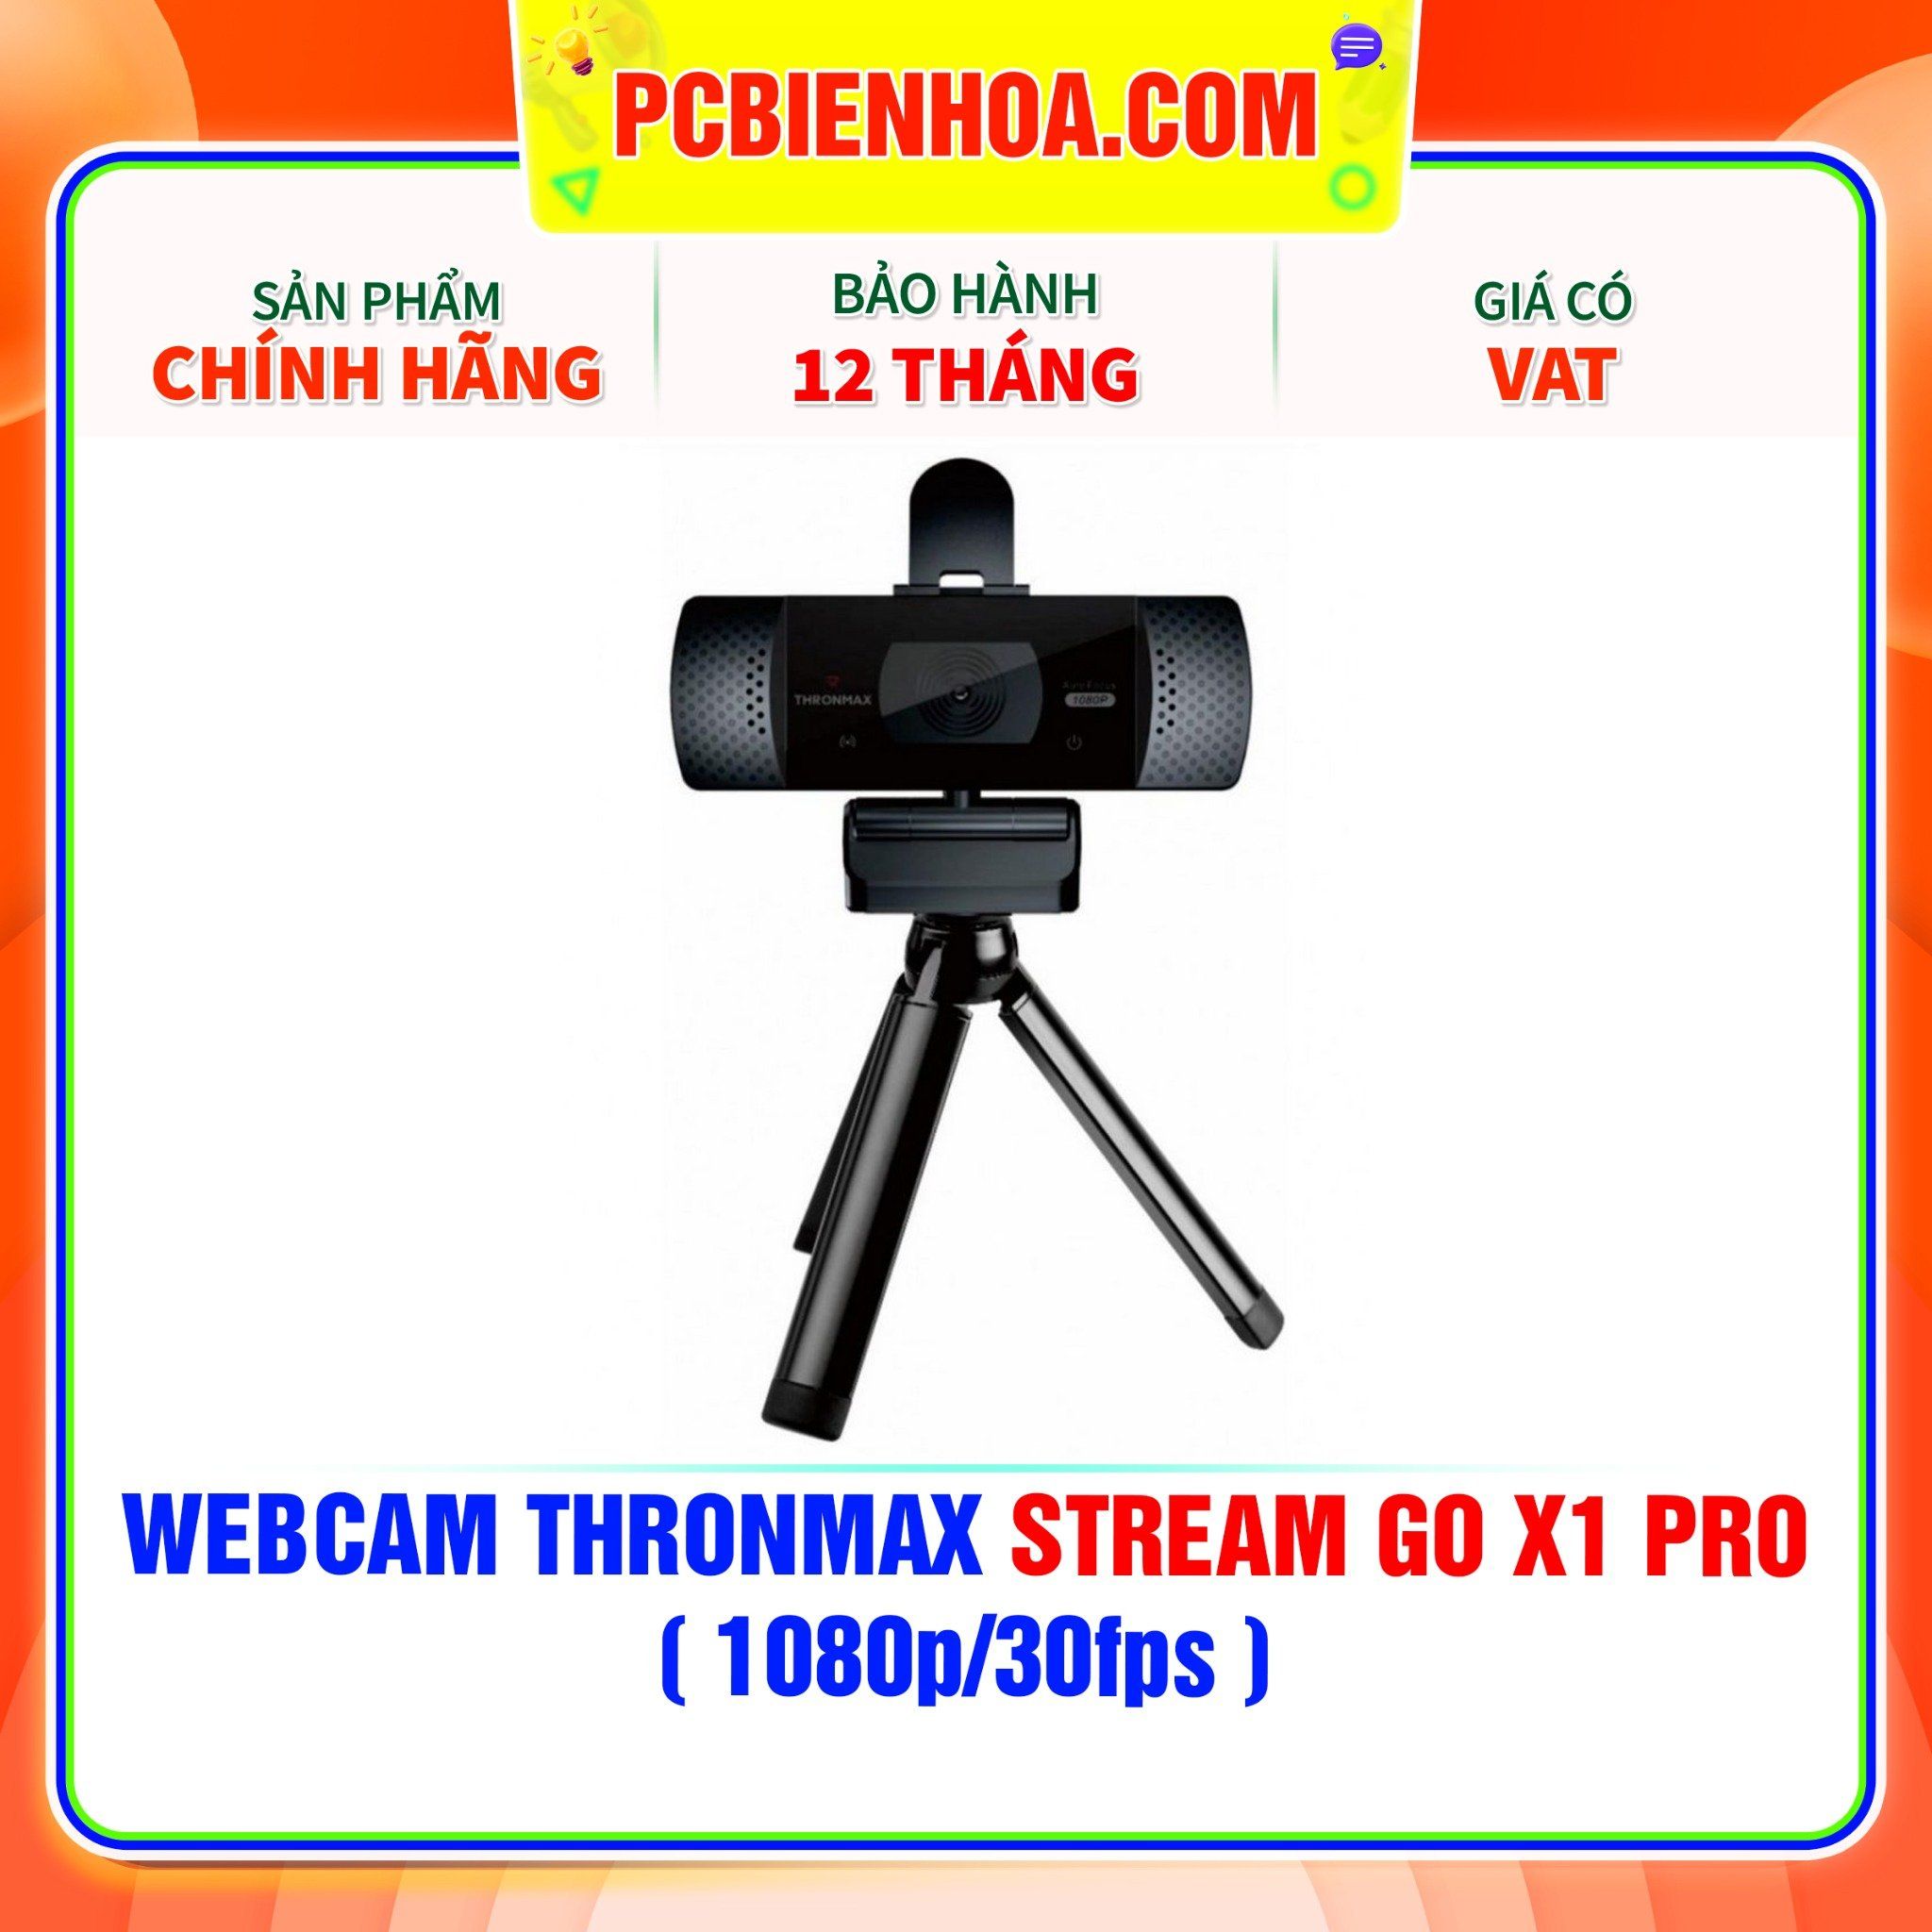  WEBCAM THRONMAX STREAM GO X1 PRO - KÈM TRIPOD ( 1080p/30fps ) 